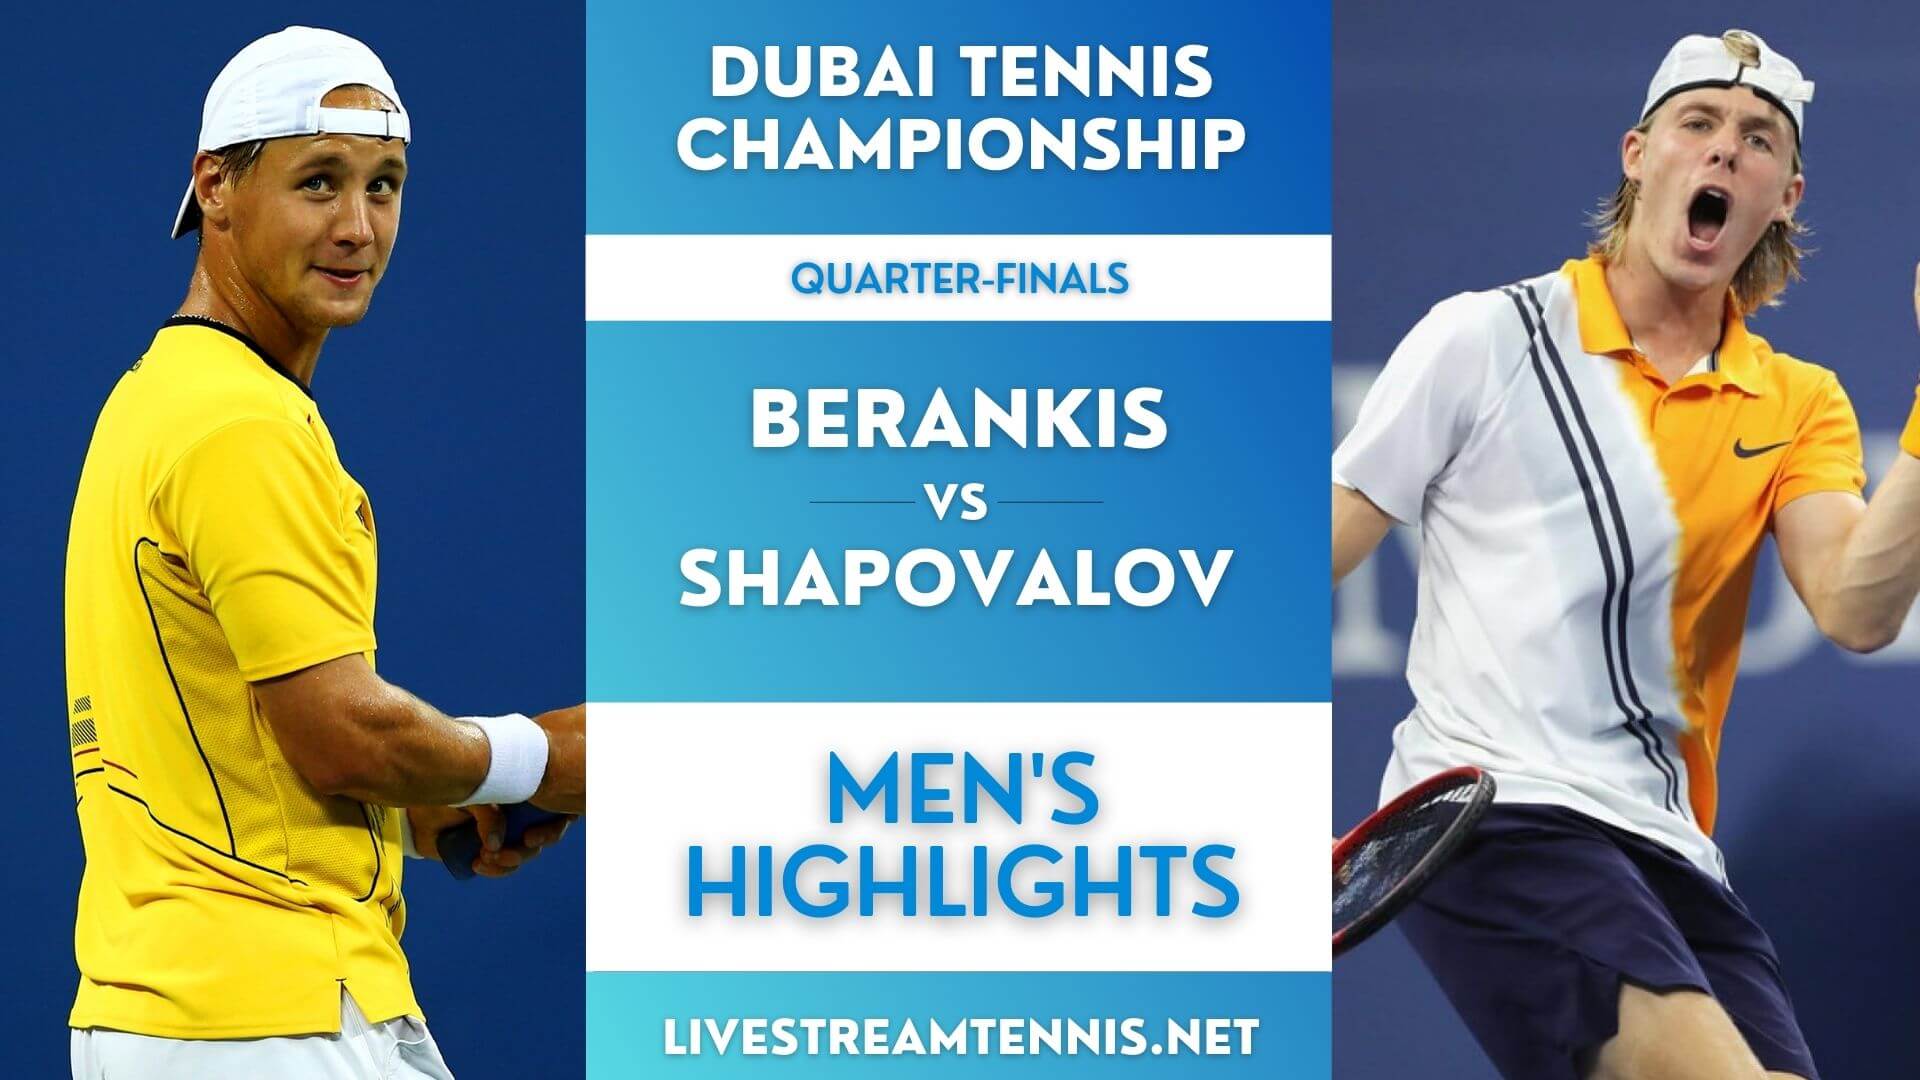 Dubai Tennis Championships Quarter Final 1 Highlights 2022